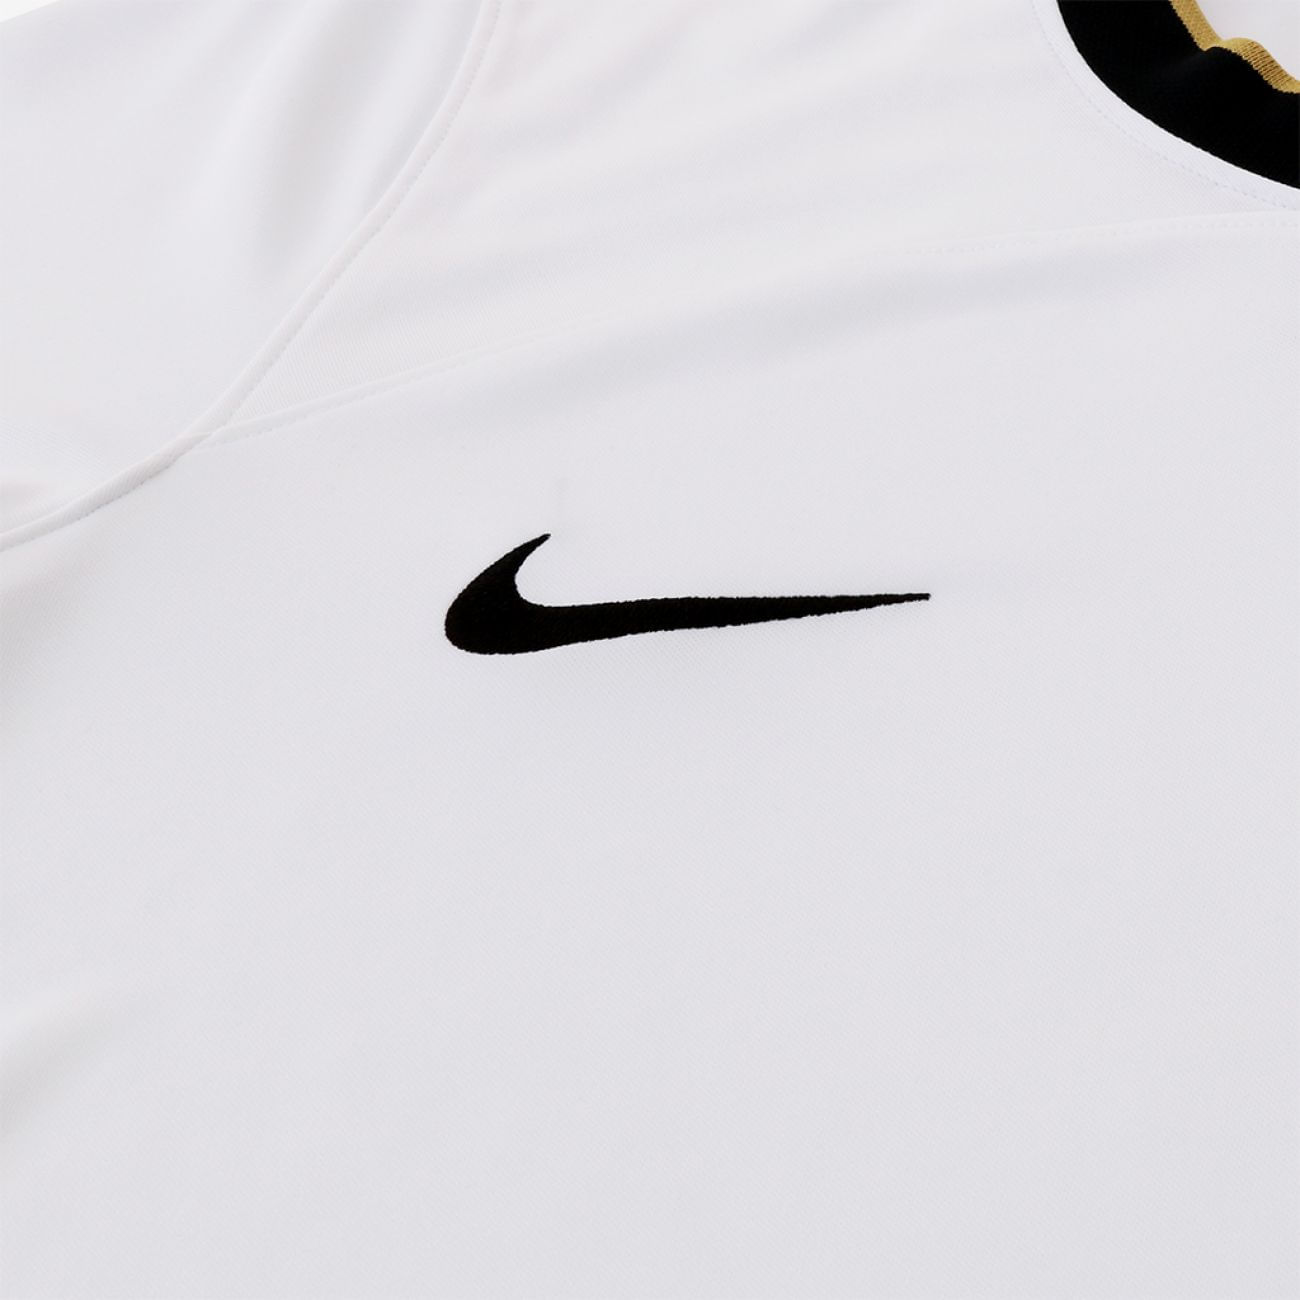 Camisa Nike Corinthians I Dri-FIT Foundation Masculina - Nike